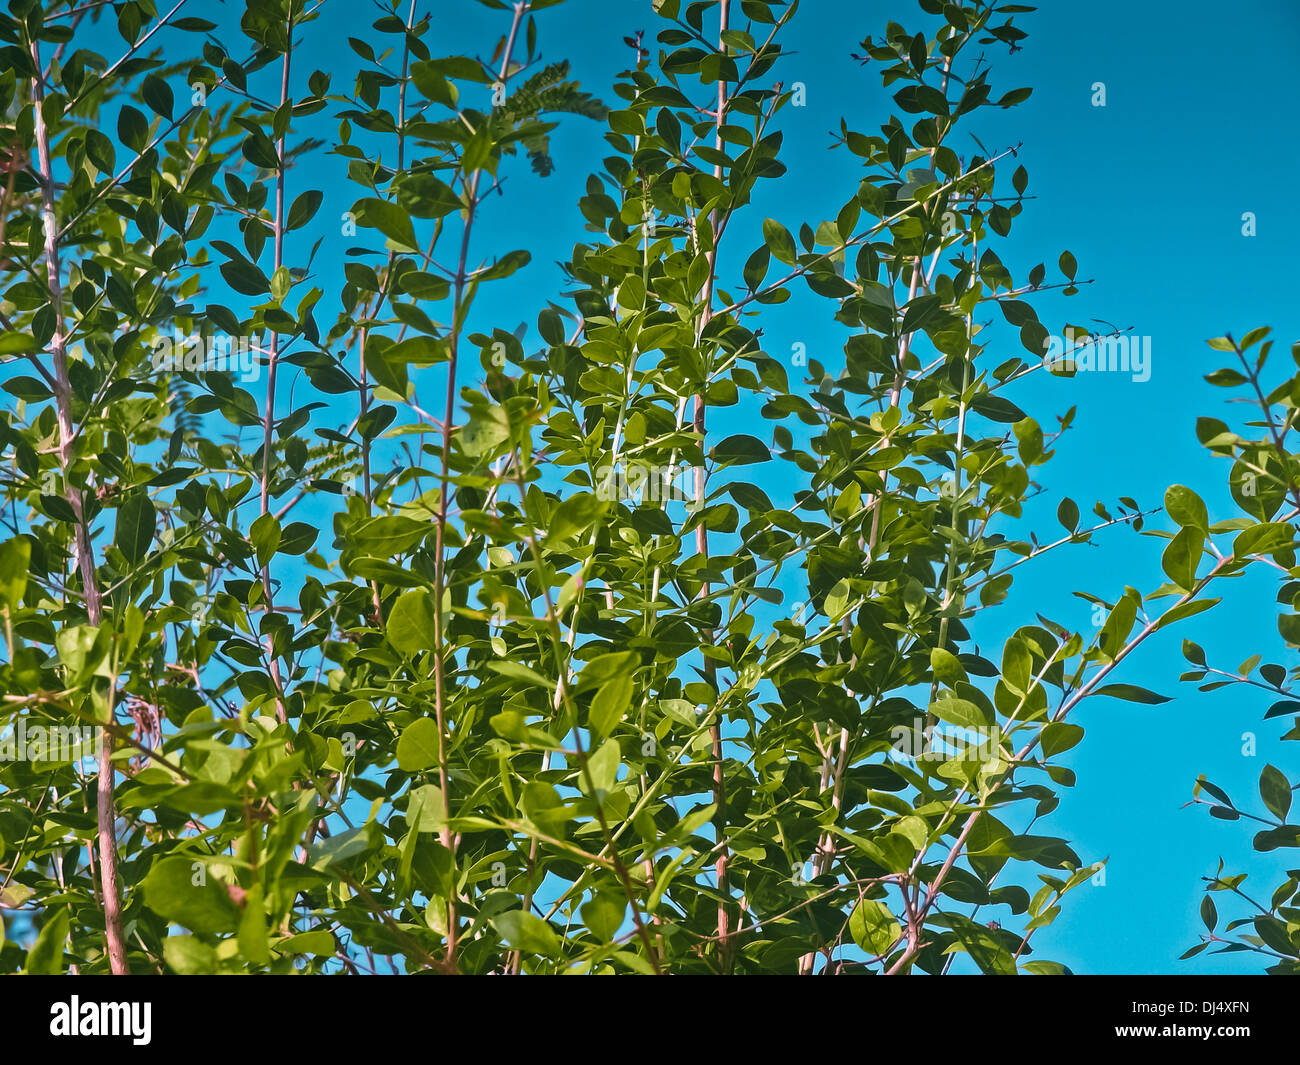 Henna Lawsonia inermis plant Stock Photo